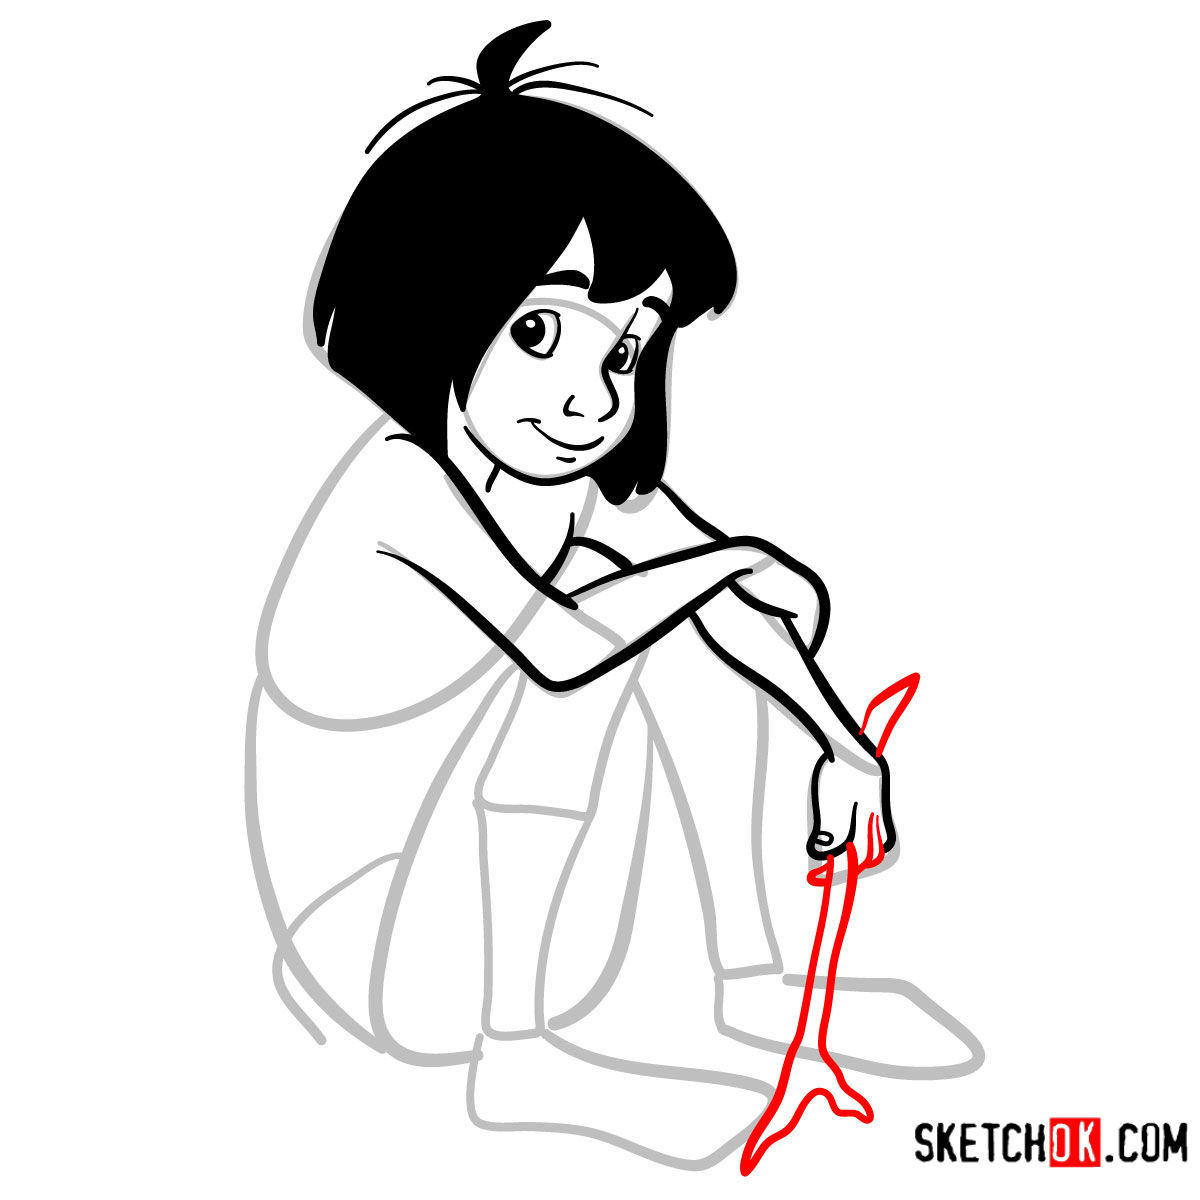 How to draw Mowgli | The Jungle Book - step 08